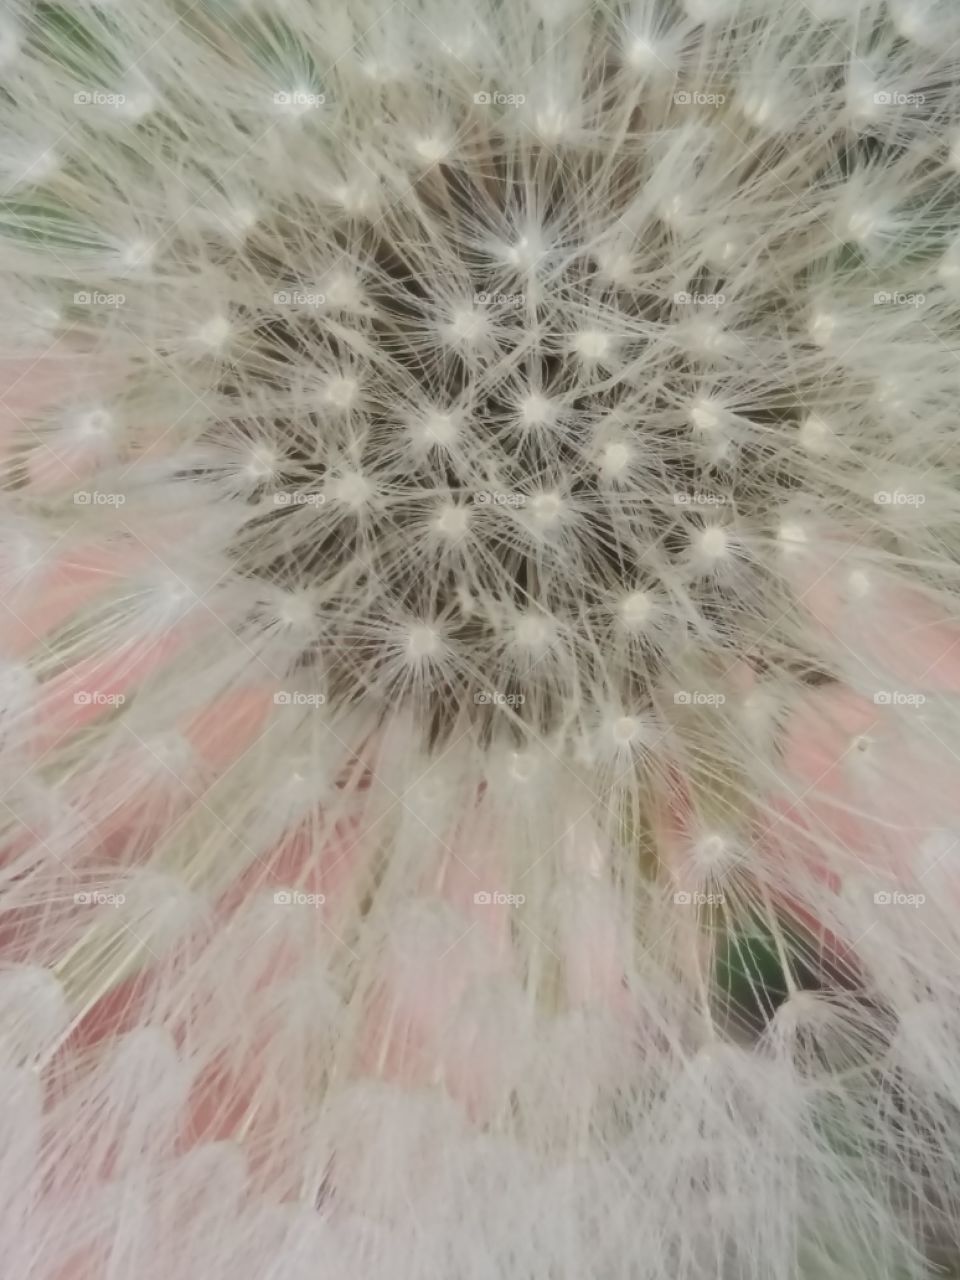 The love of dandelion